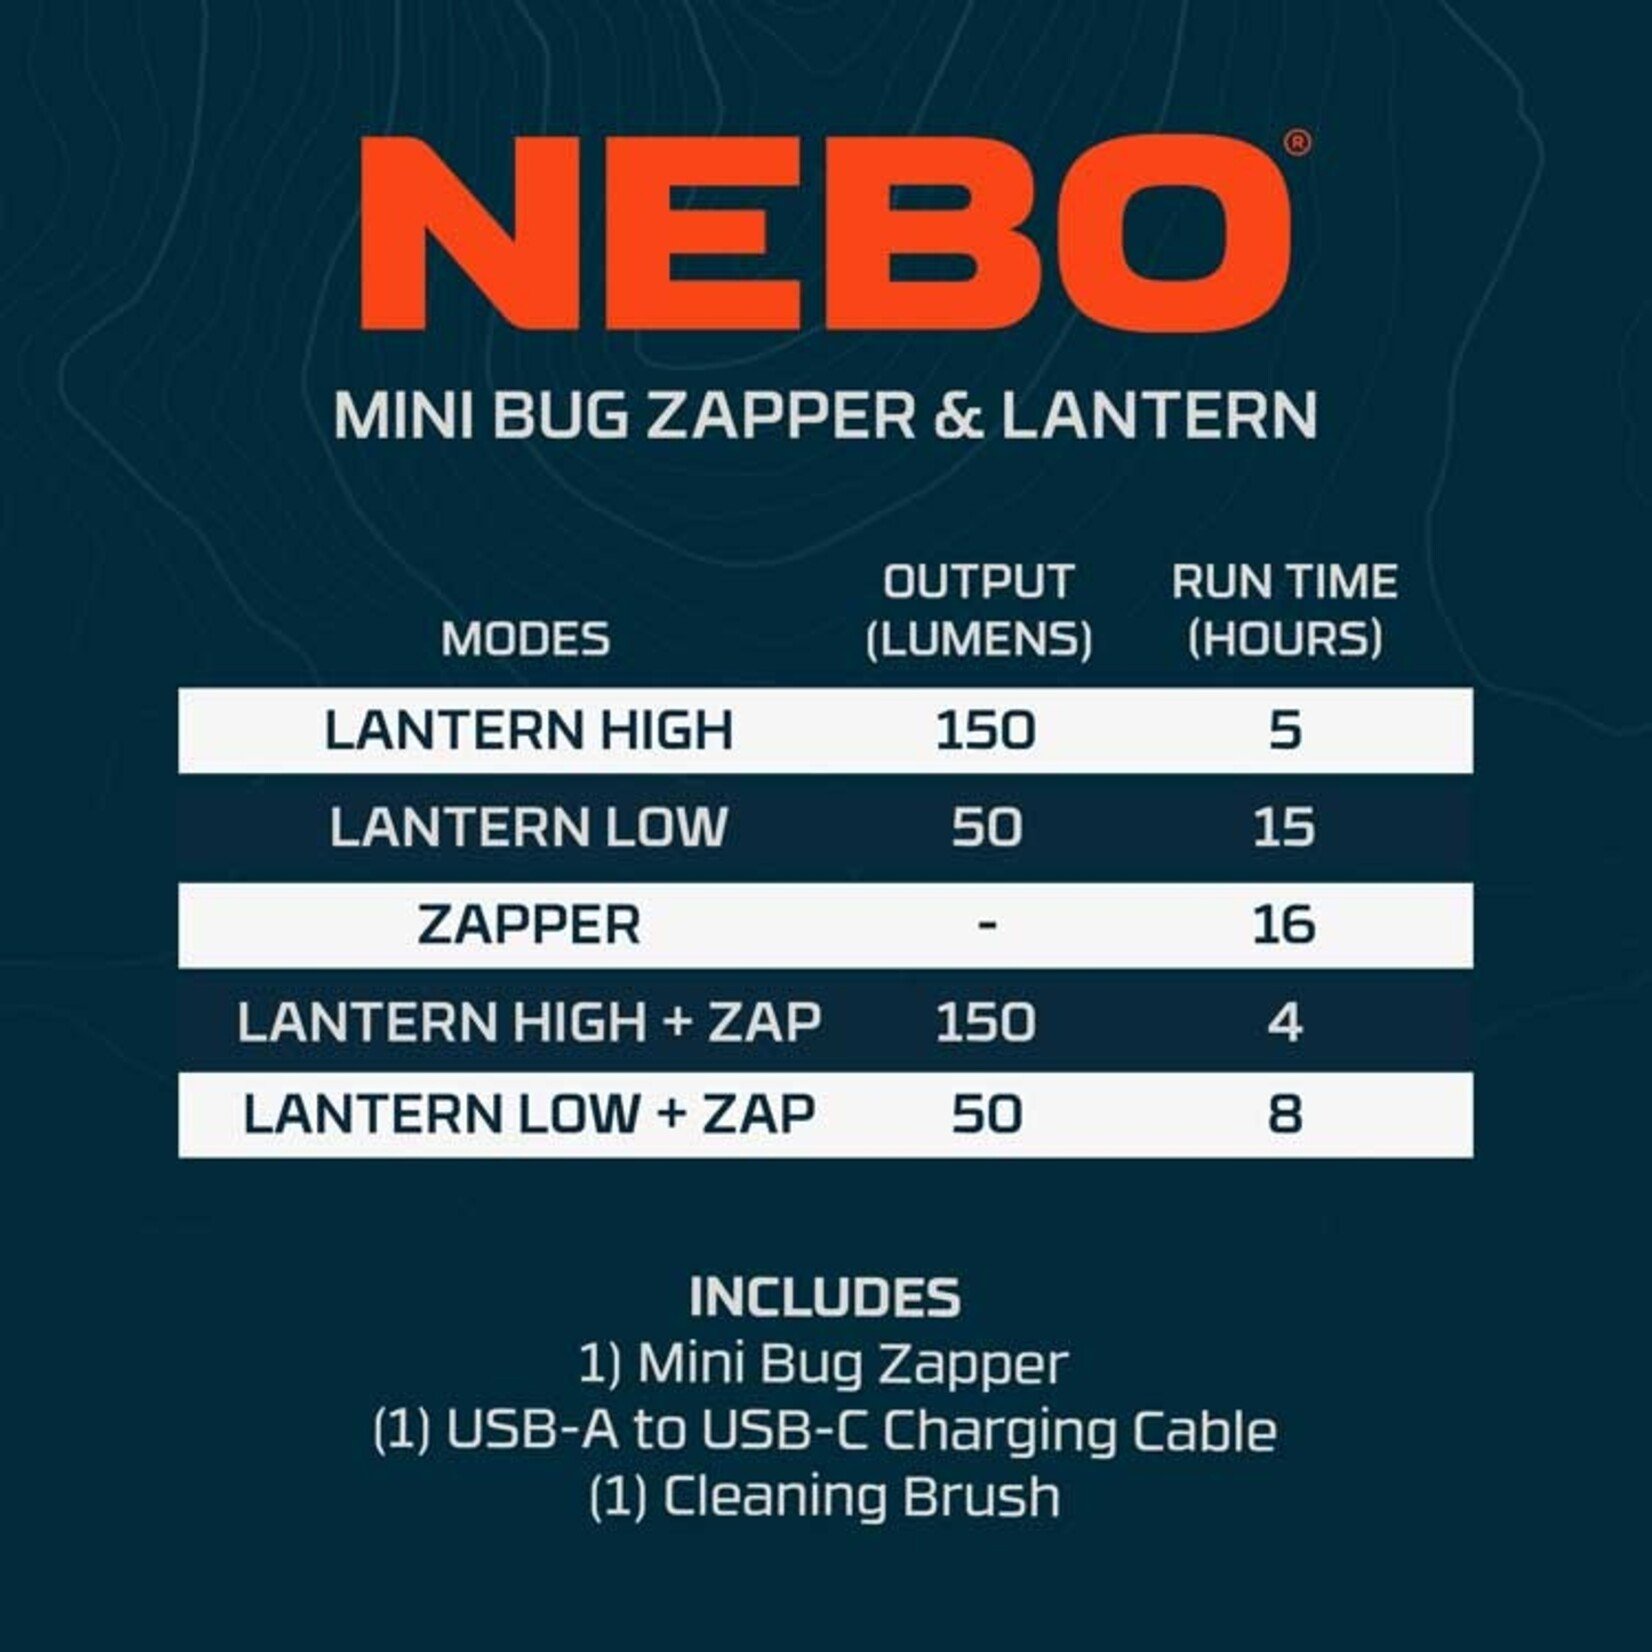 NEBO Mini Bug Zapper and Lantern